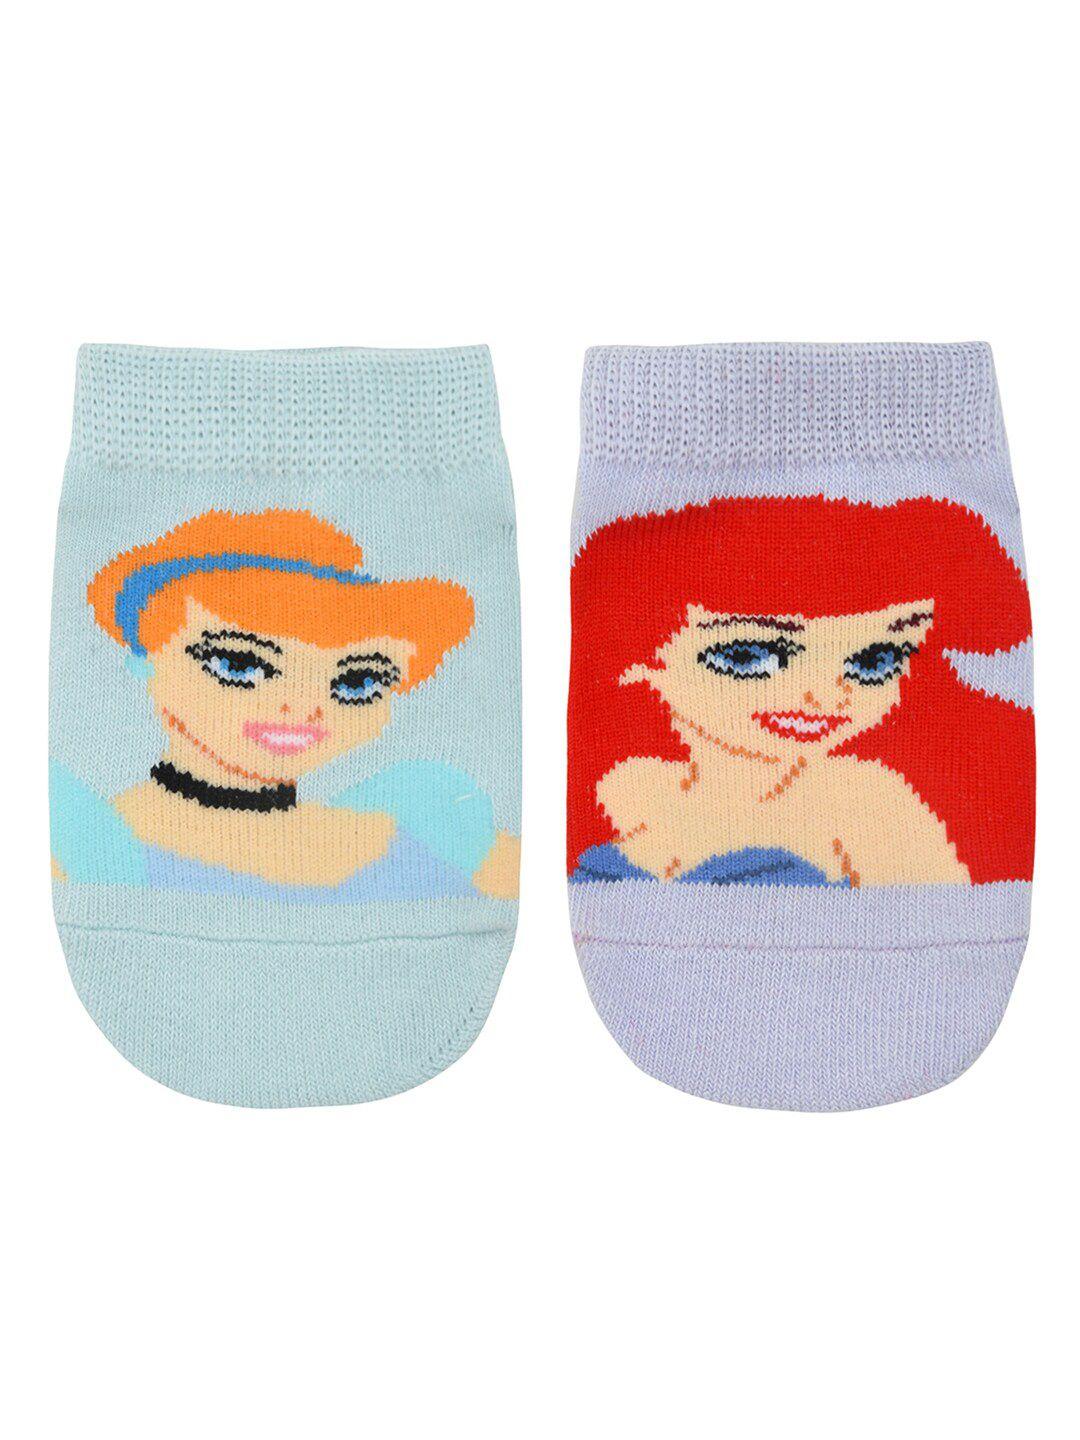 balenzia x disney girls pack of 2 patterned cotton anti-skid lowcut socks